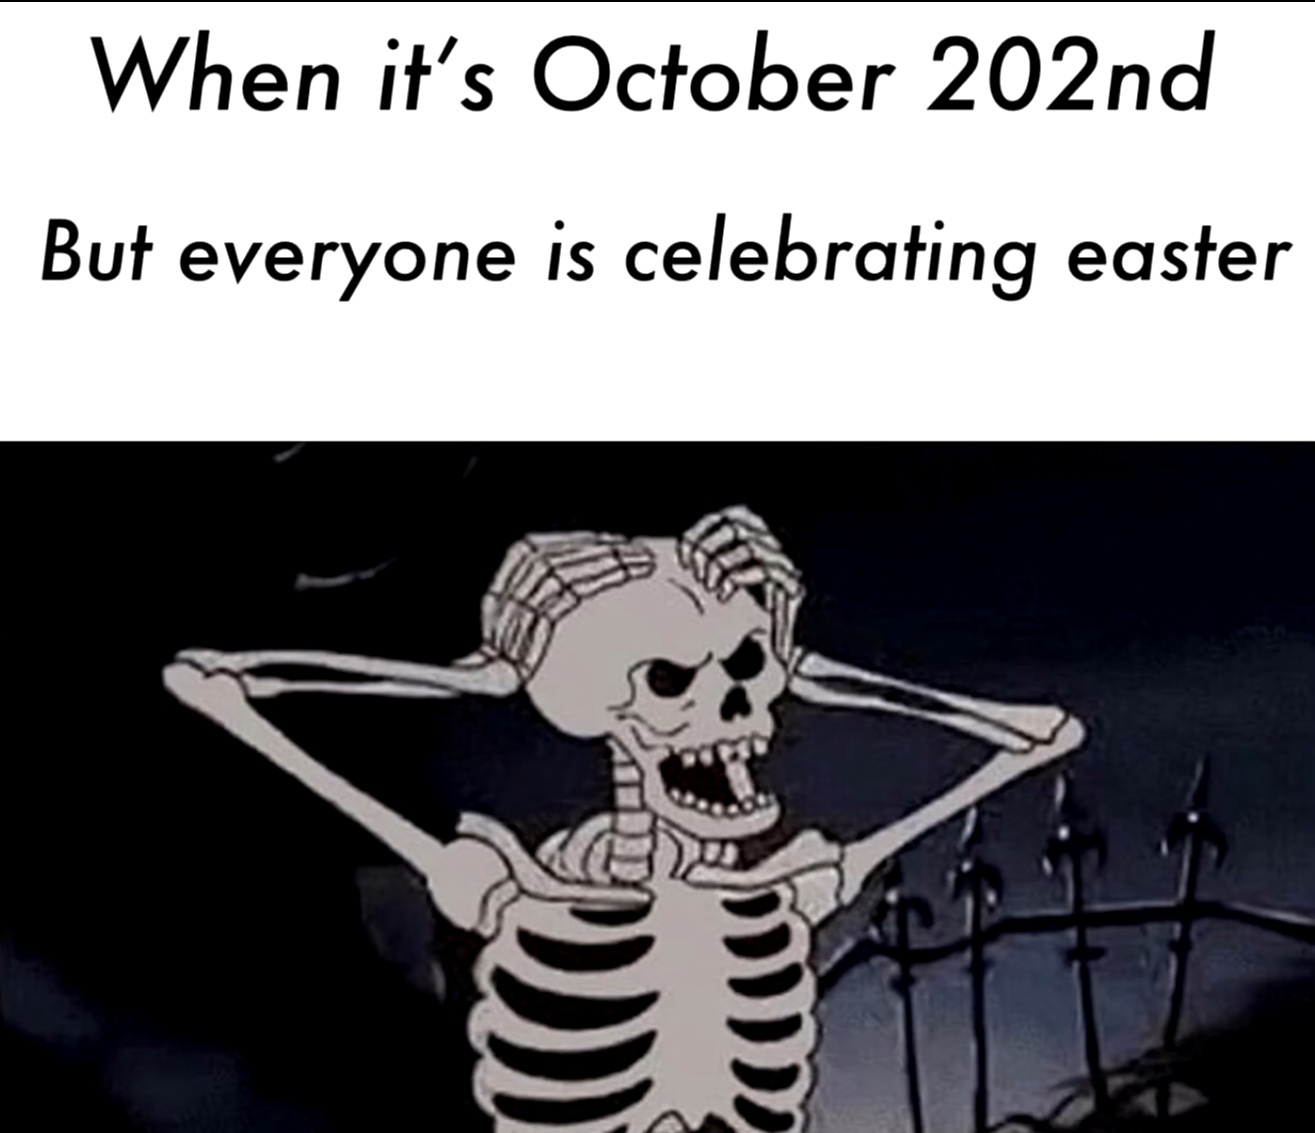 skeletor must come save us all - meme